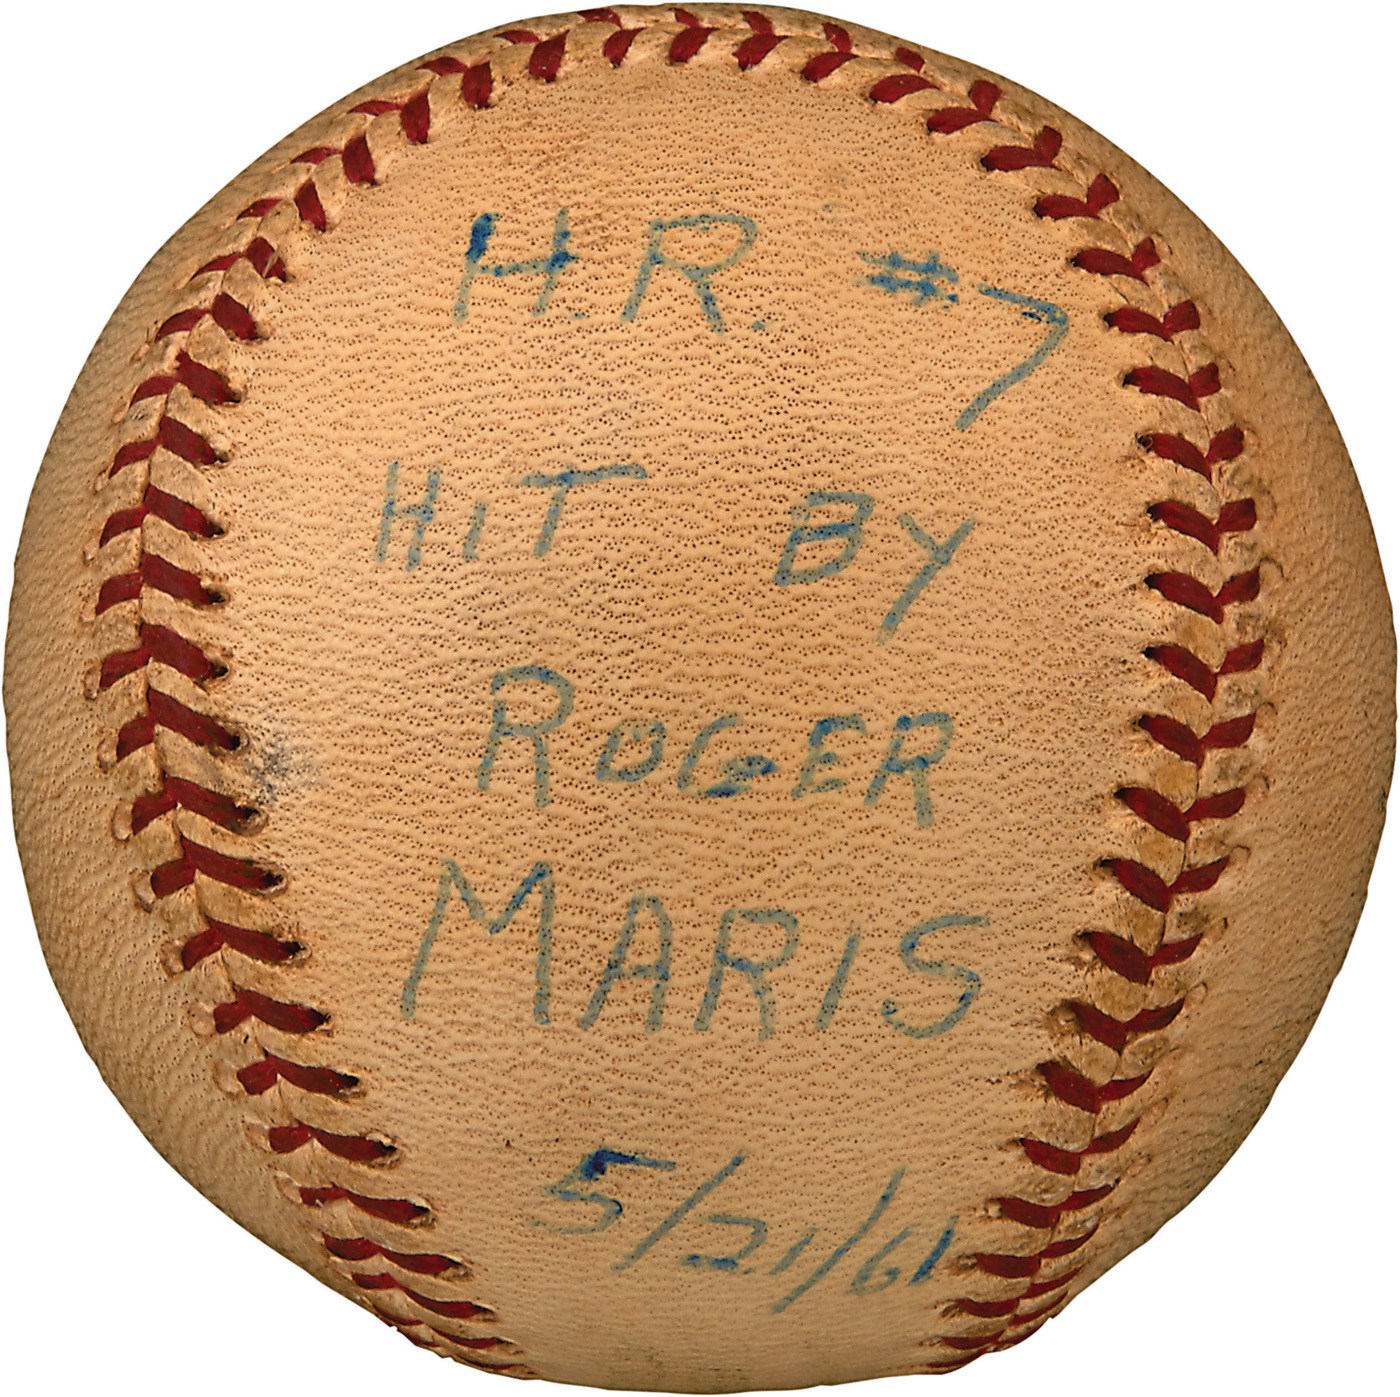 - 1961 Roger Maris #7 Home Run Baseball w/Photo Documentation